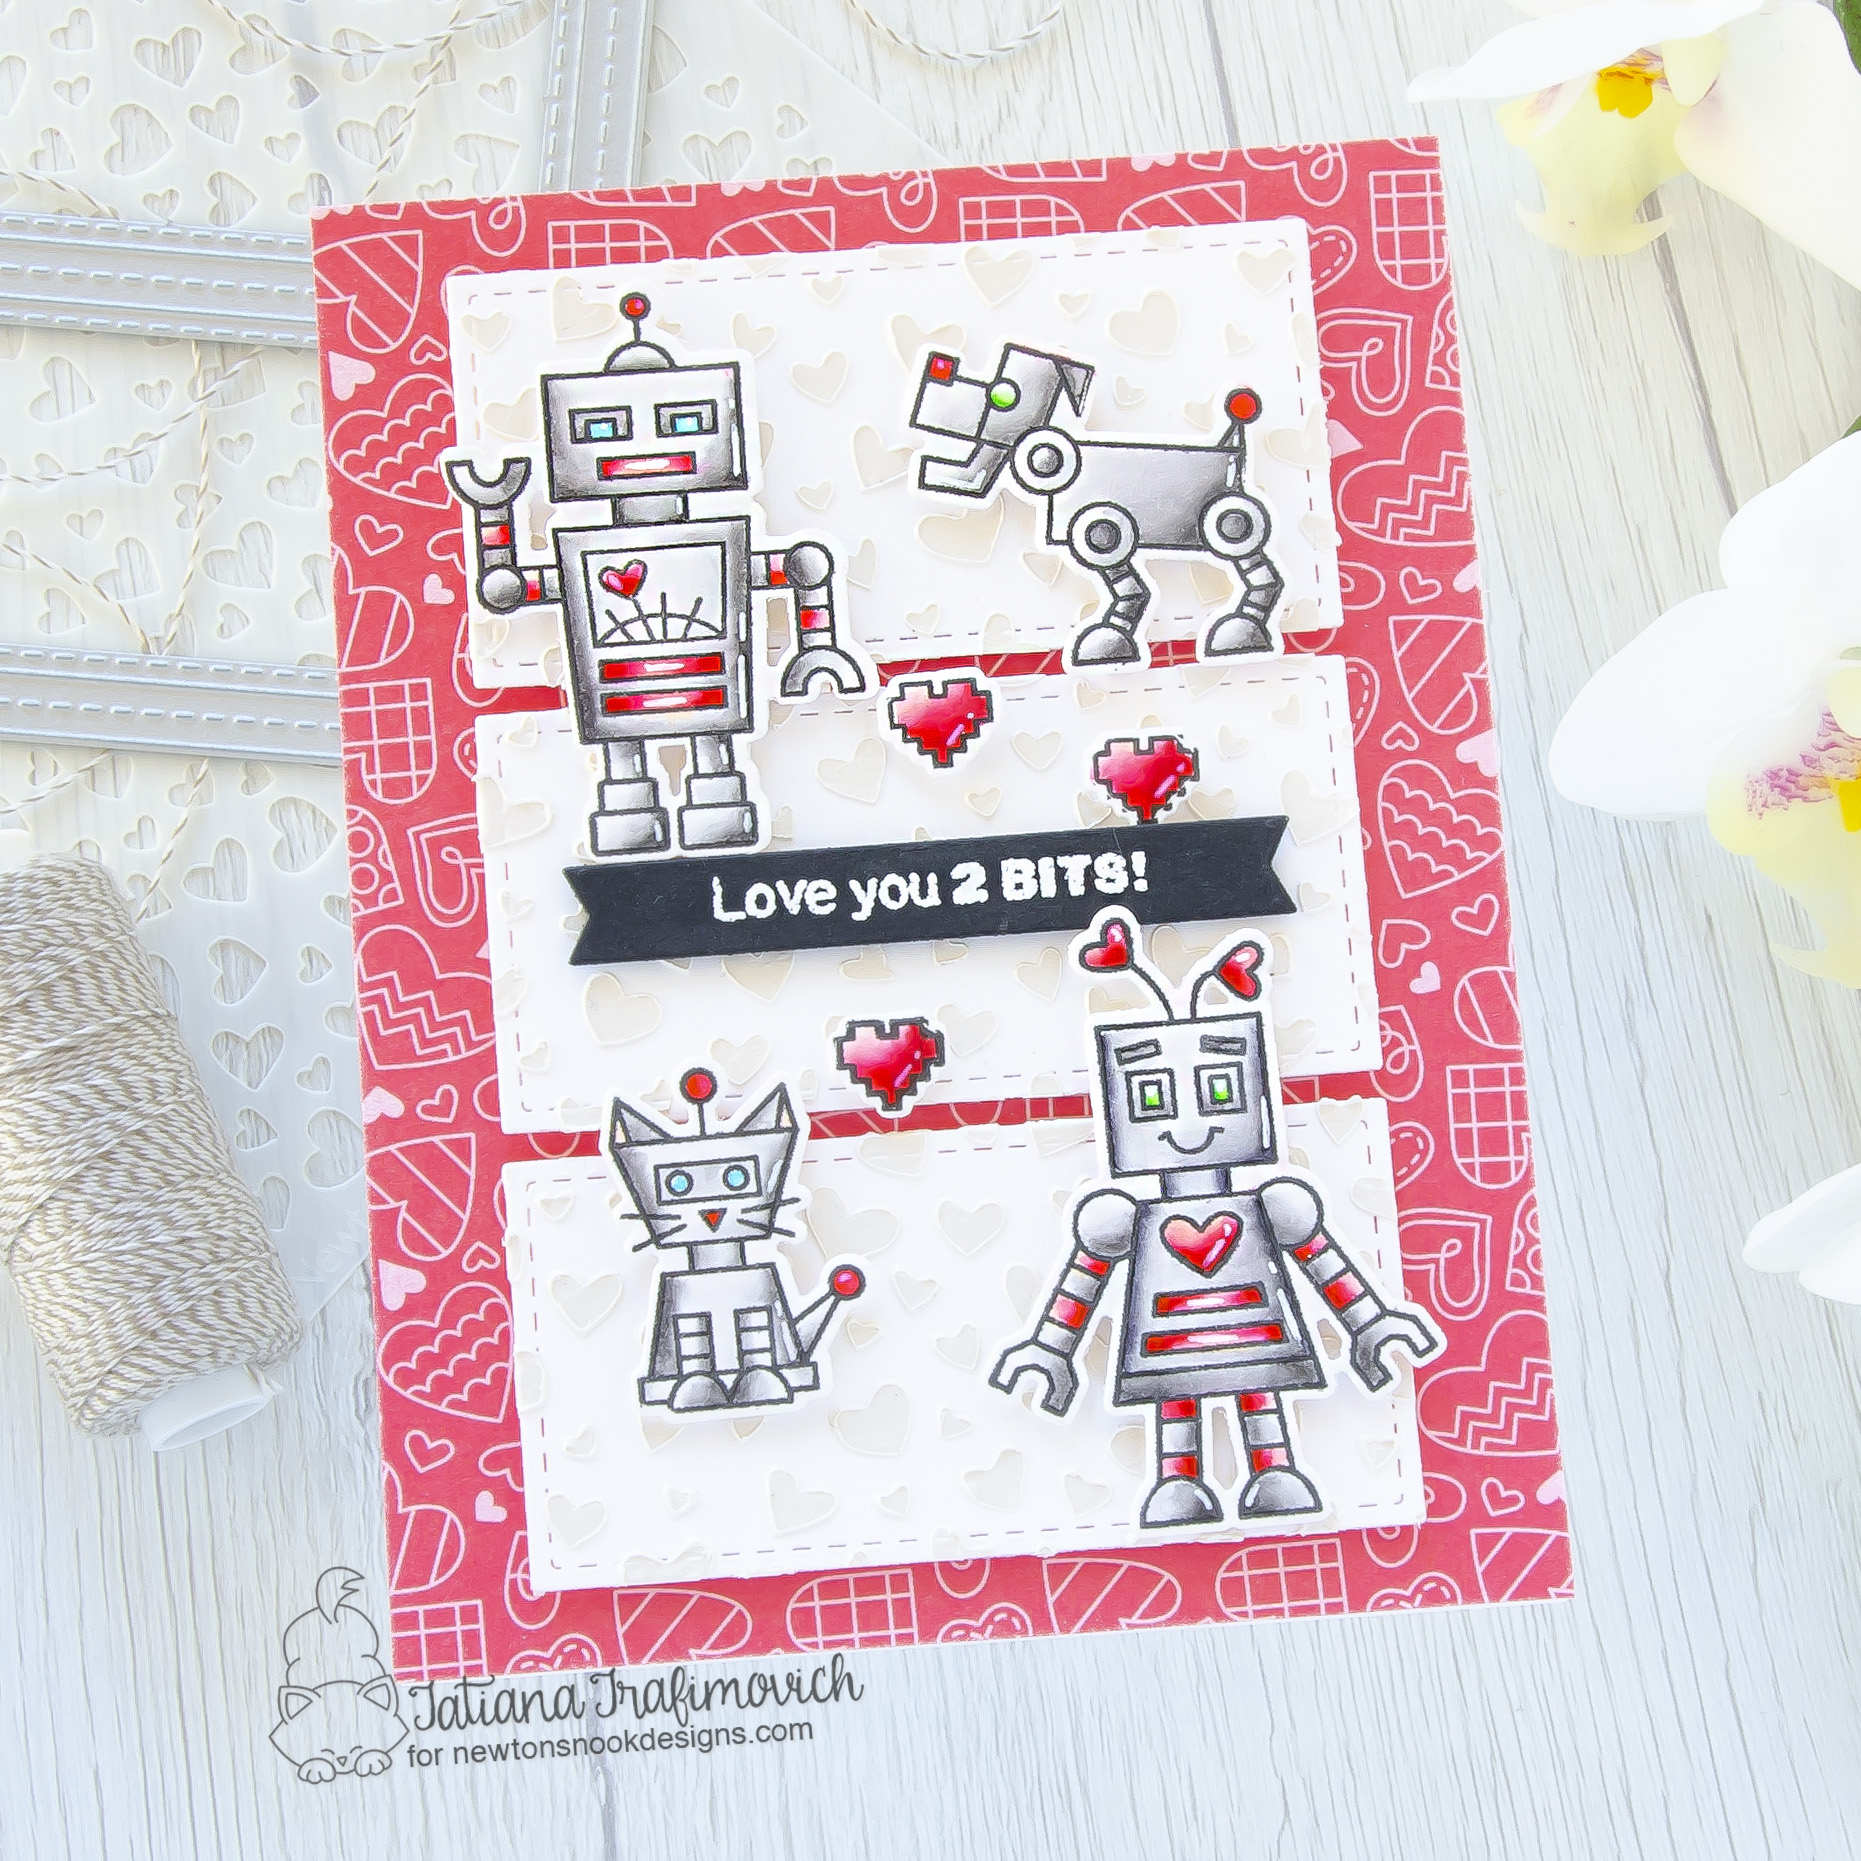 Love You 2 Bits #handmade card by Tatiana Trafimovich #tatianacraftandart - Love Bots stamp set by Newton's Nook Designs #newtonsnook